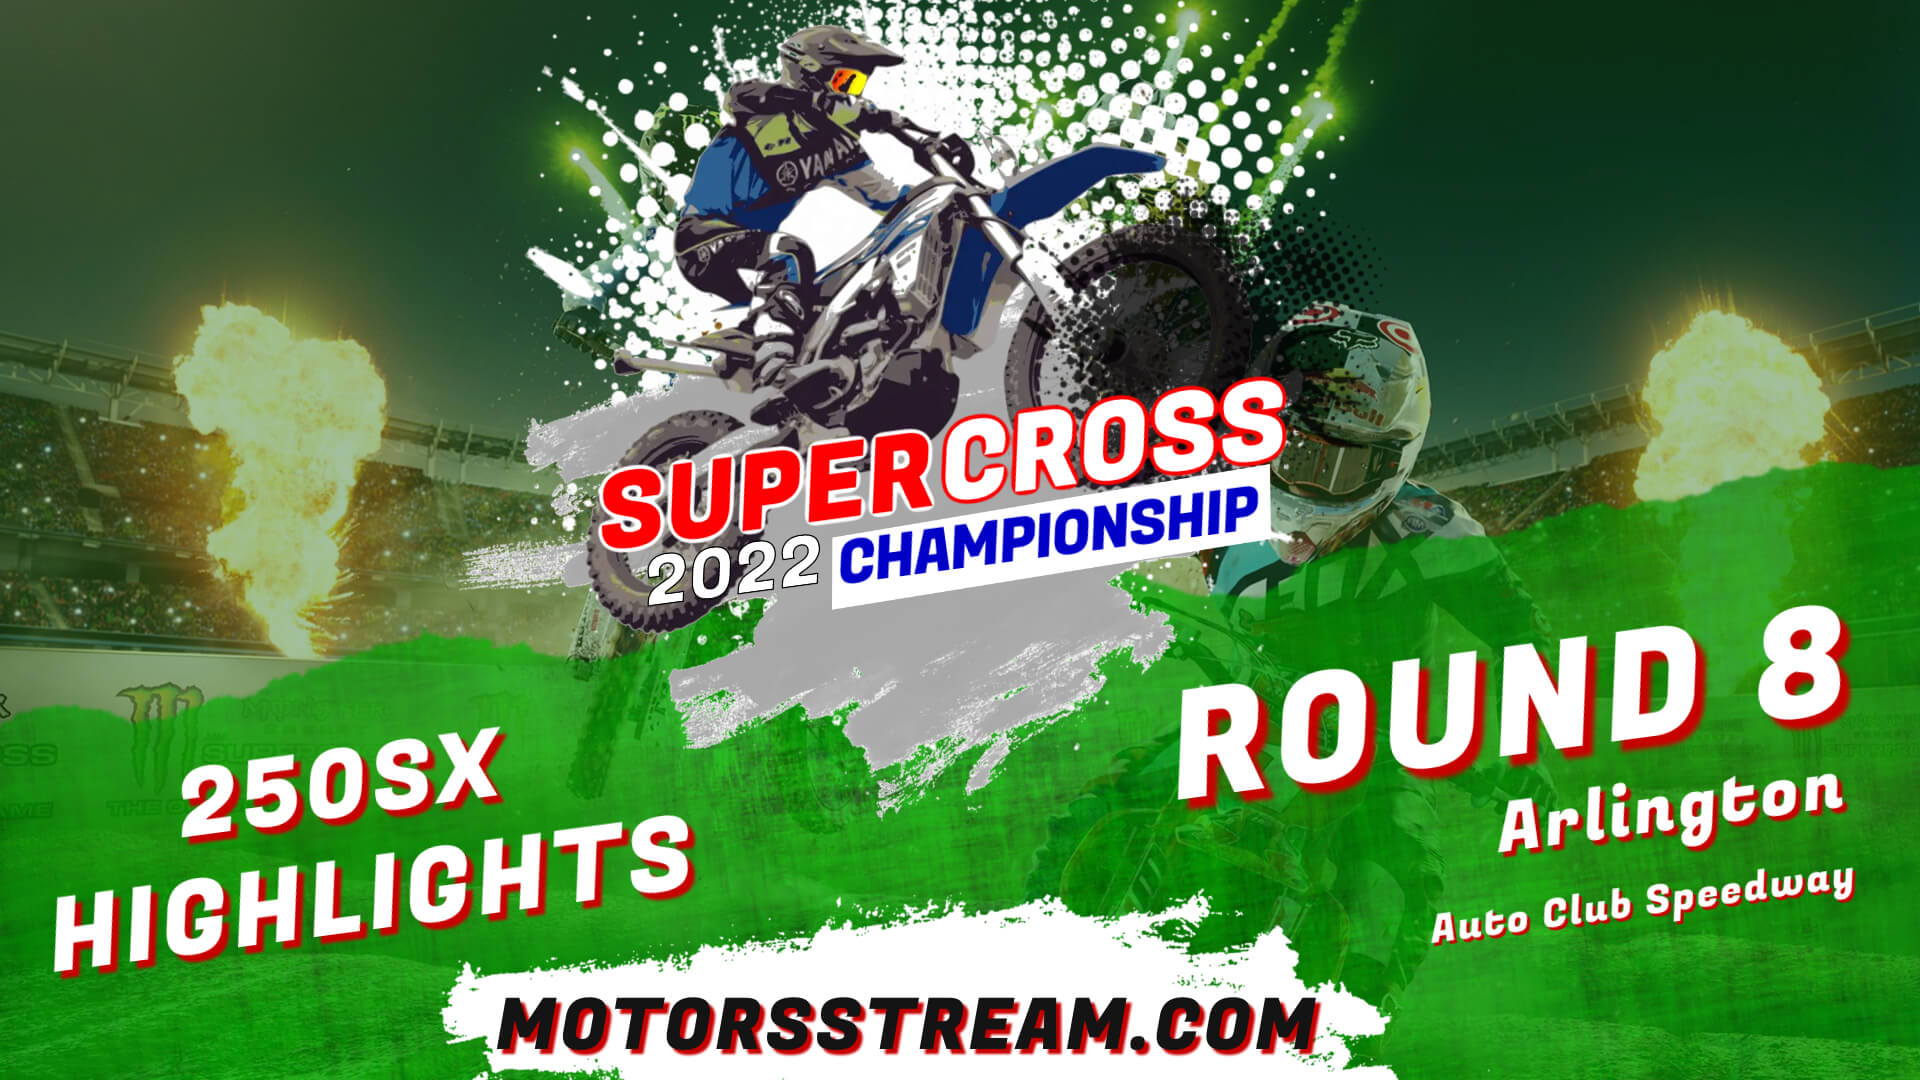 Supercross Round 8 Arlington 250SX Highlights 2022